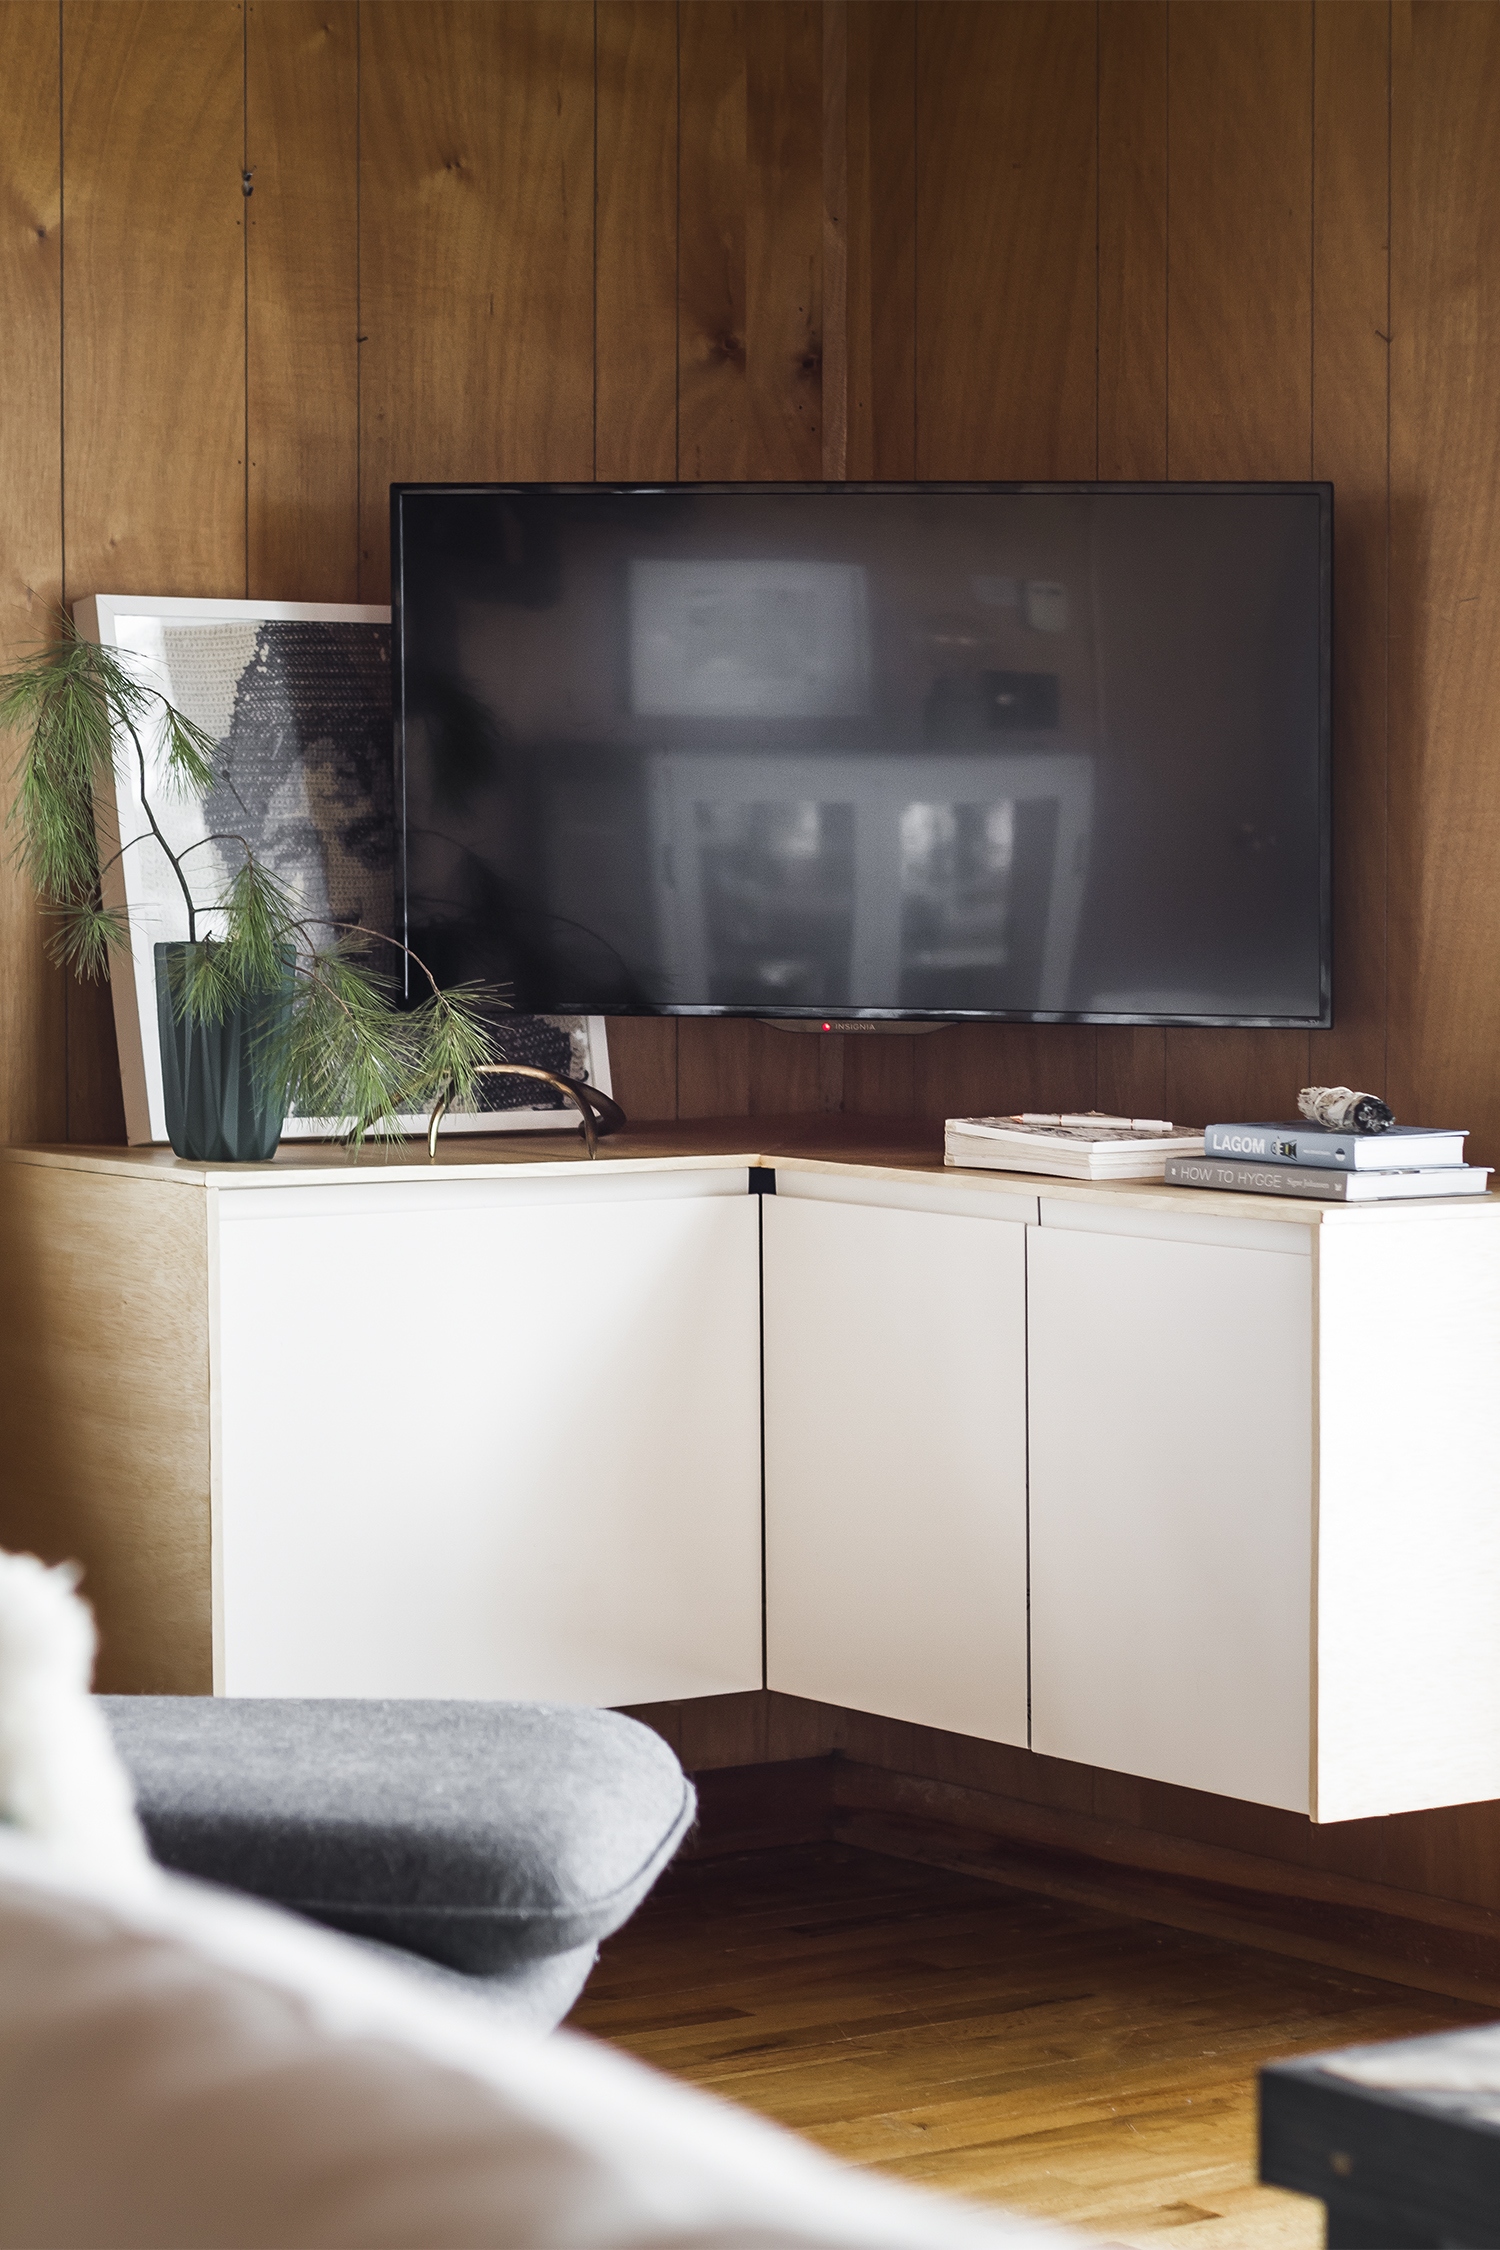 Deucecities Henhouse | Custom Corner TV Credenza using Ikea Kitchen Cabinets